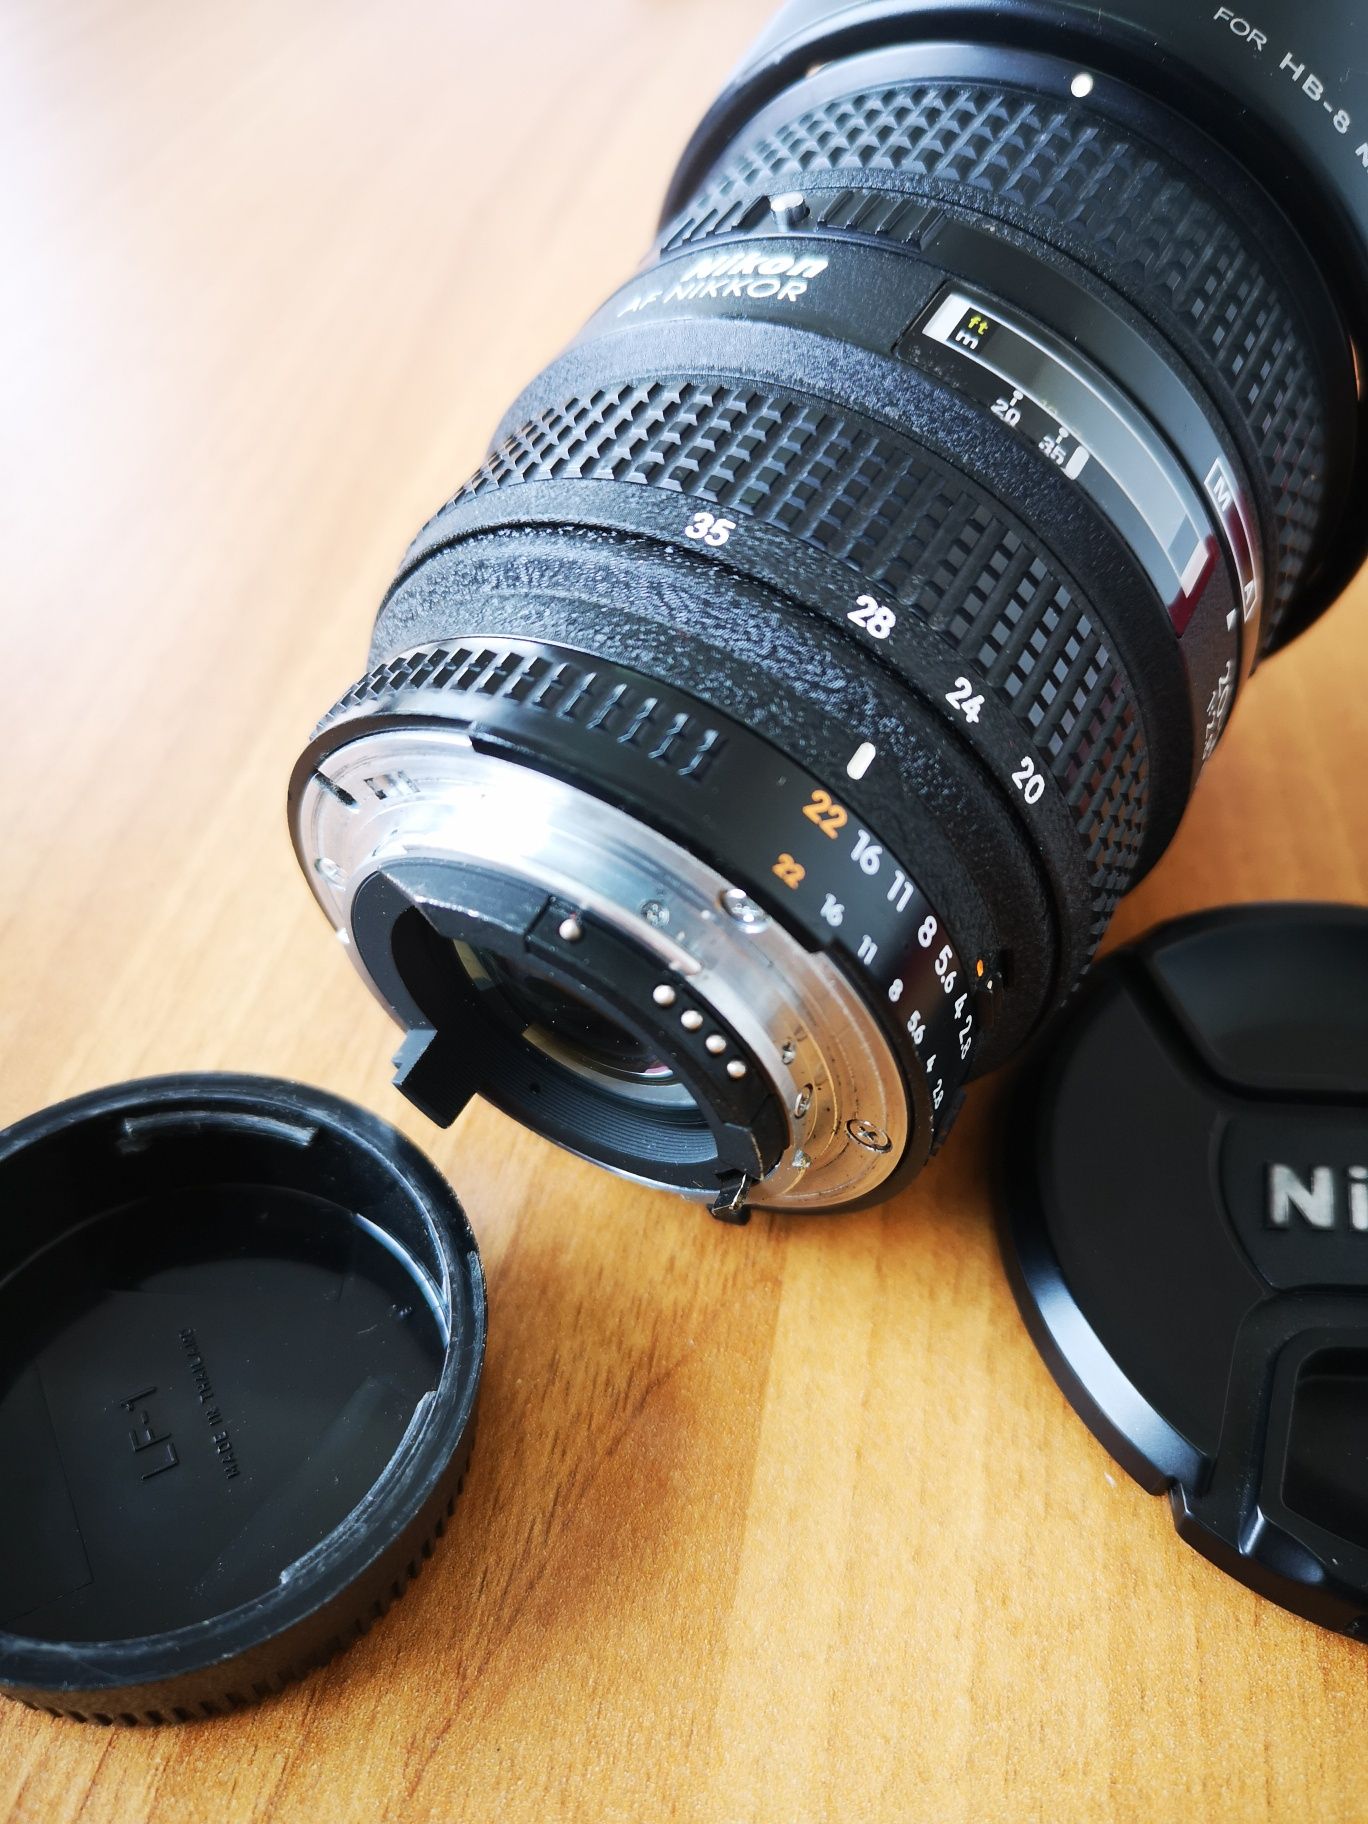 Obiectiv Nikon Zoom Super Wide Angle 20-35mm f/2.8 D-IF